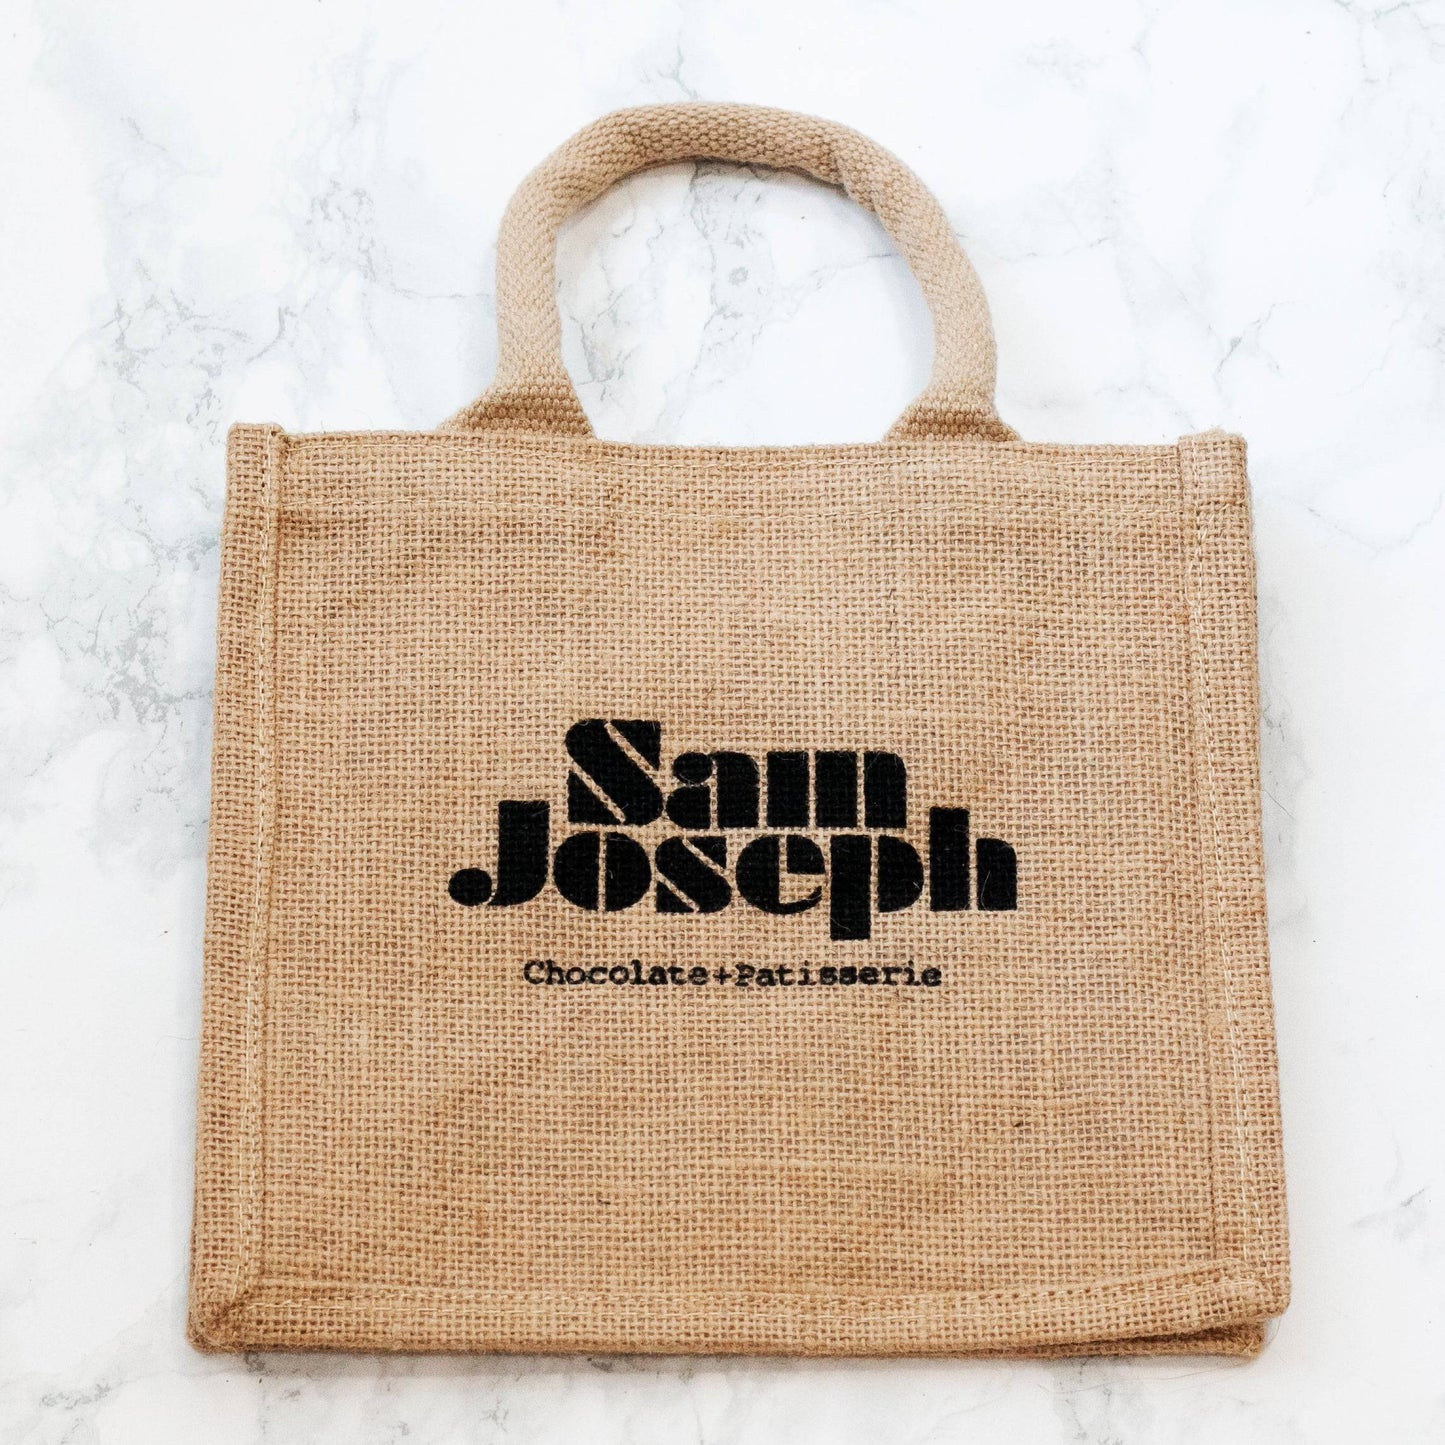 Sam Joseph tote gift bag - Sam Joseph chocolates